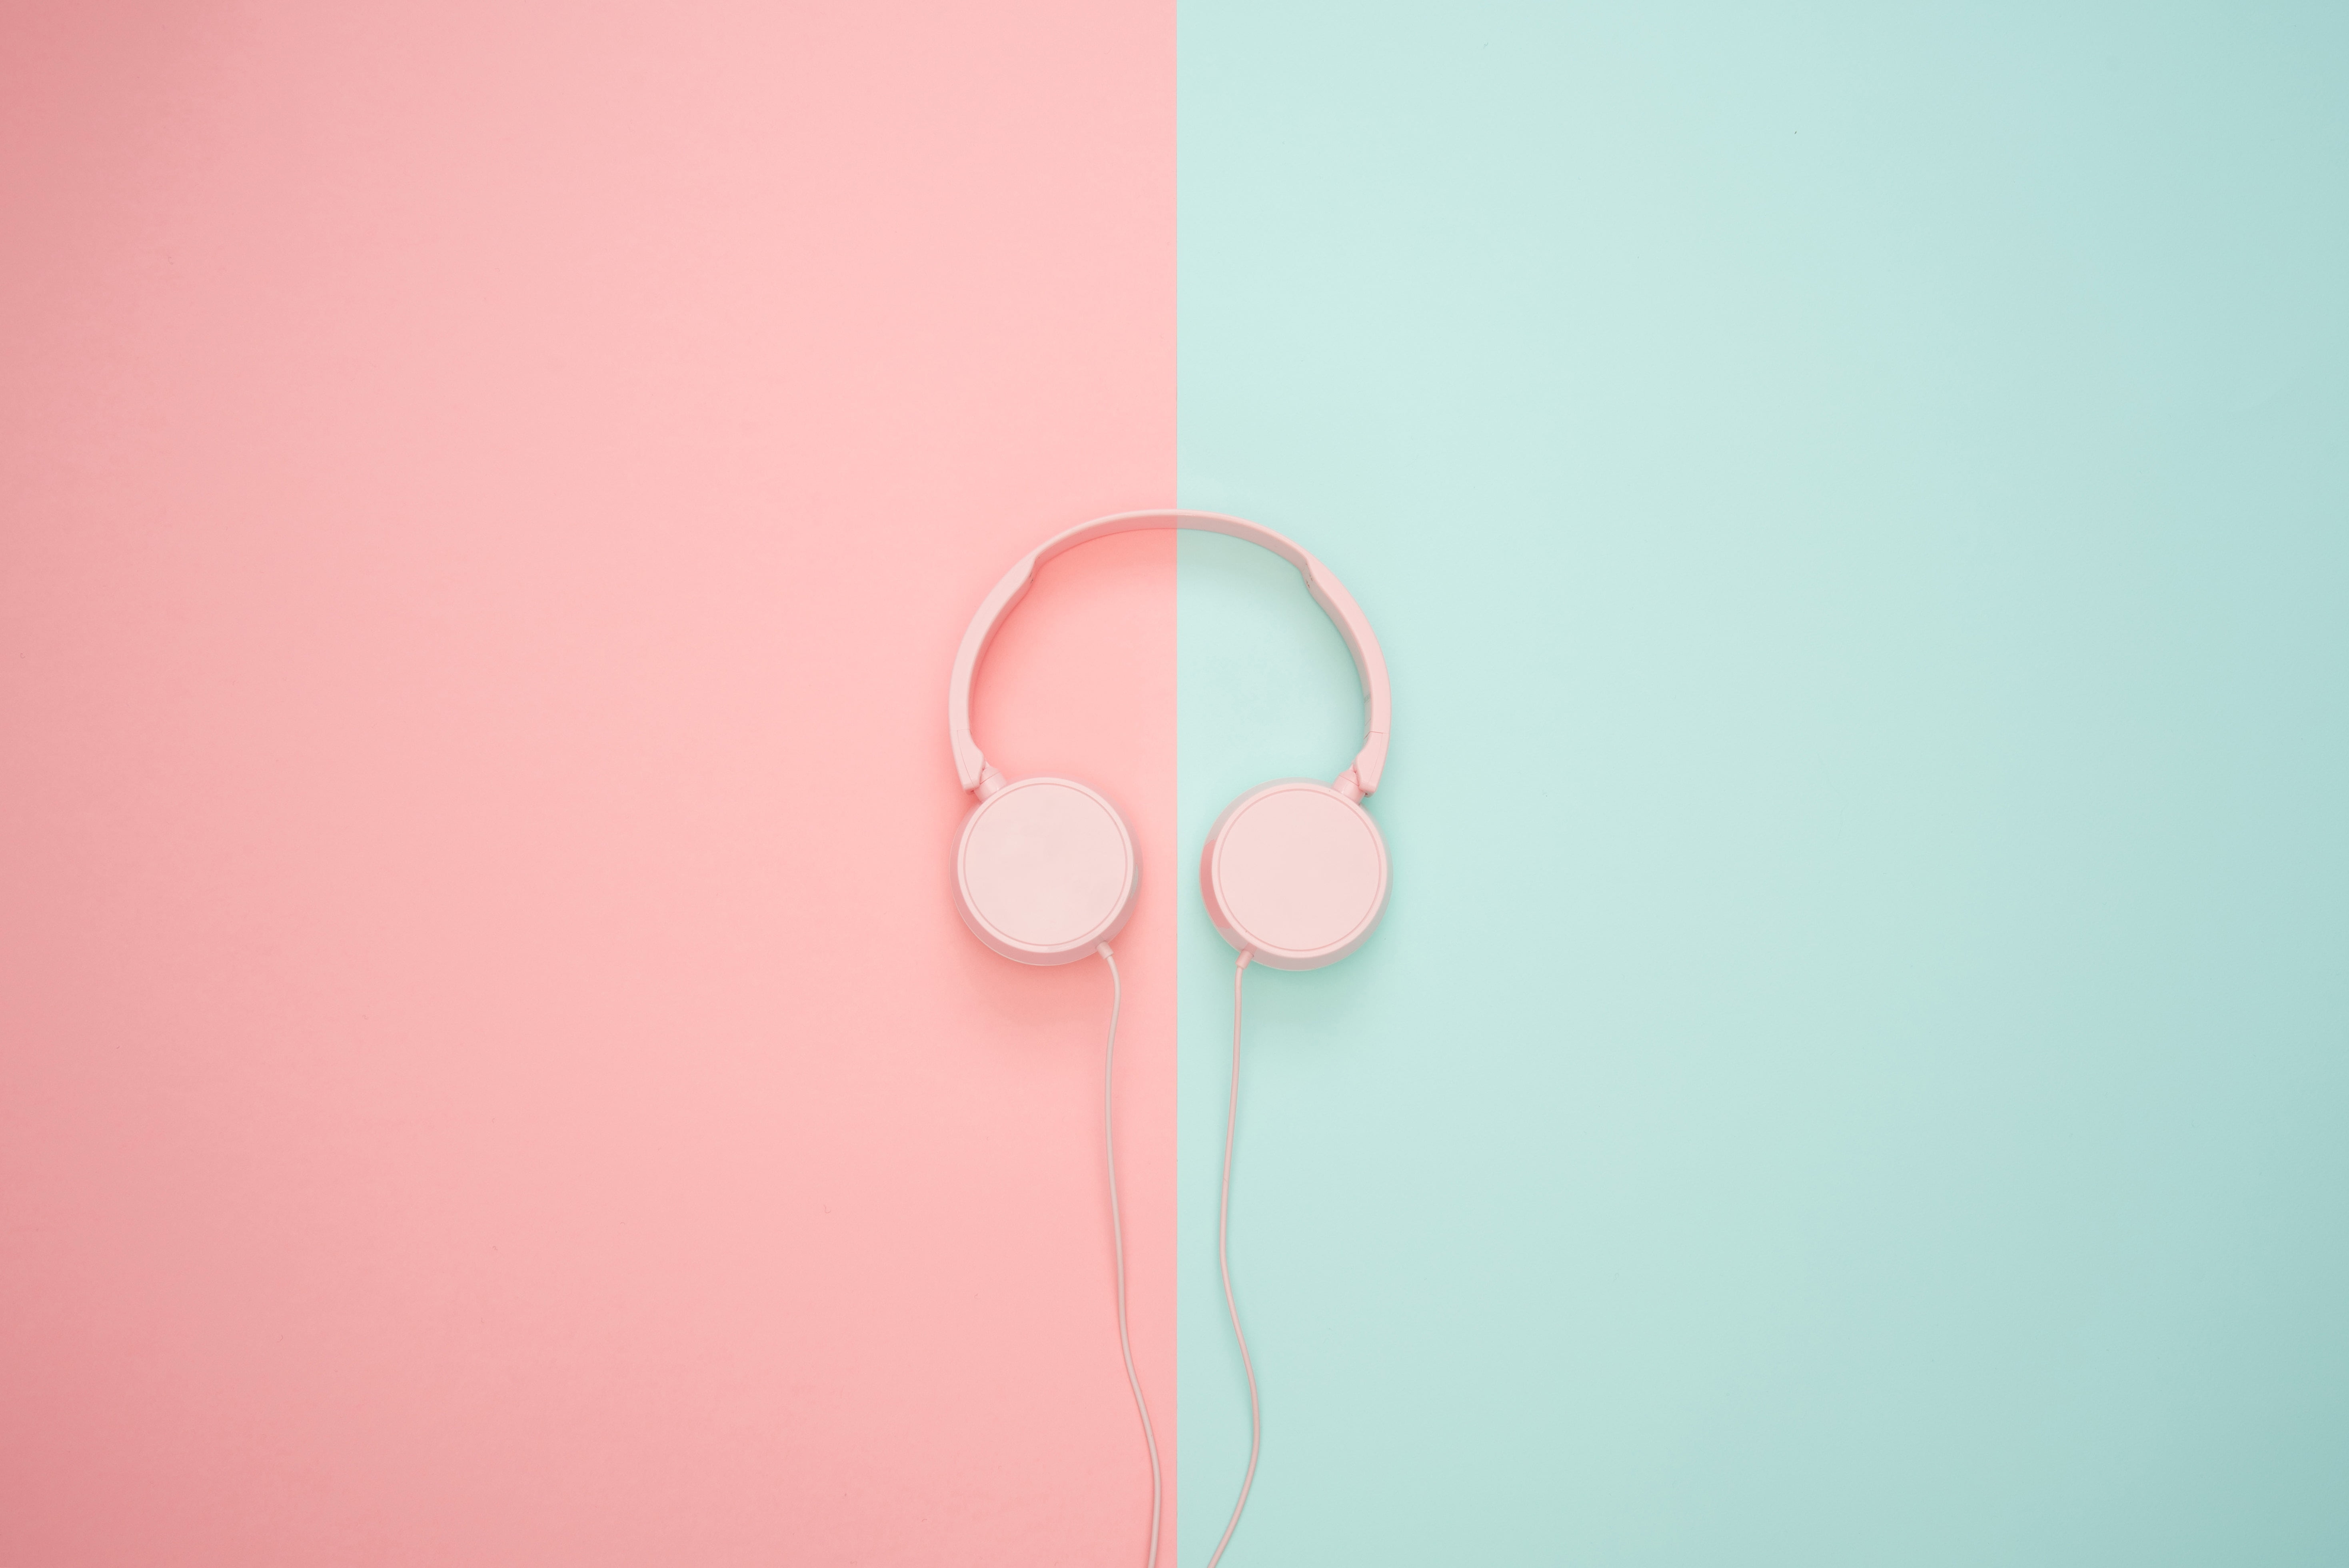 pink corded headphones, minimalism, pastel, stethoscope, healthcare And Medicine